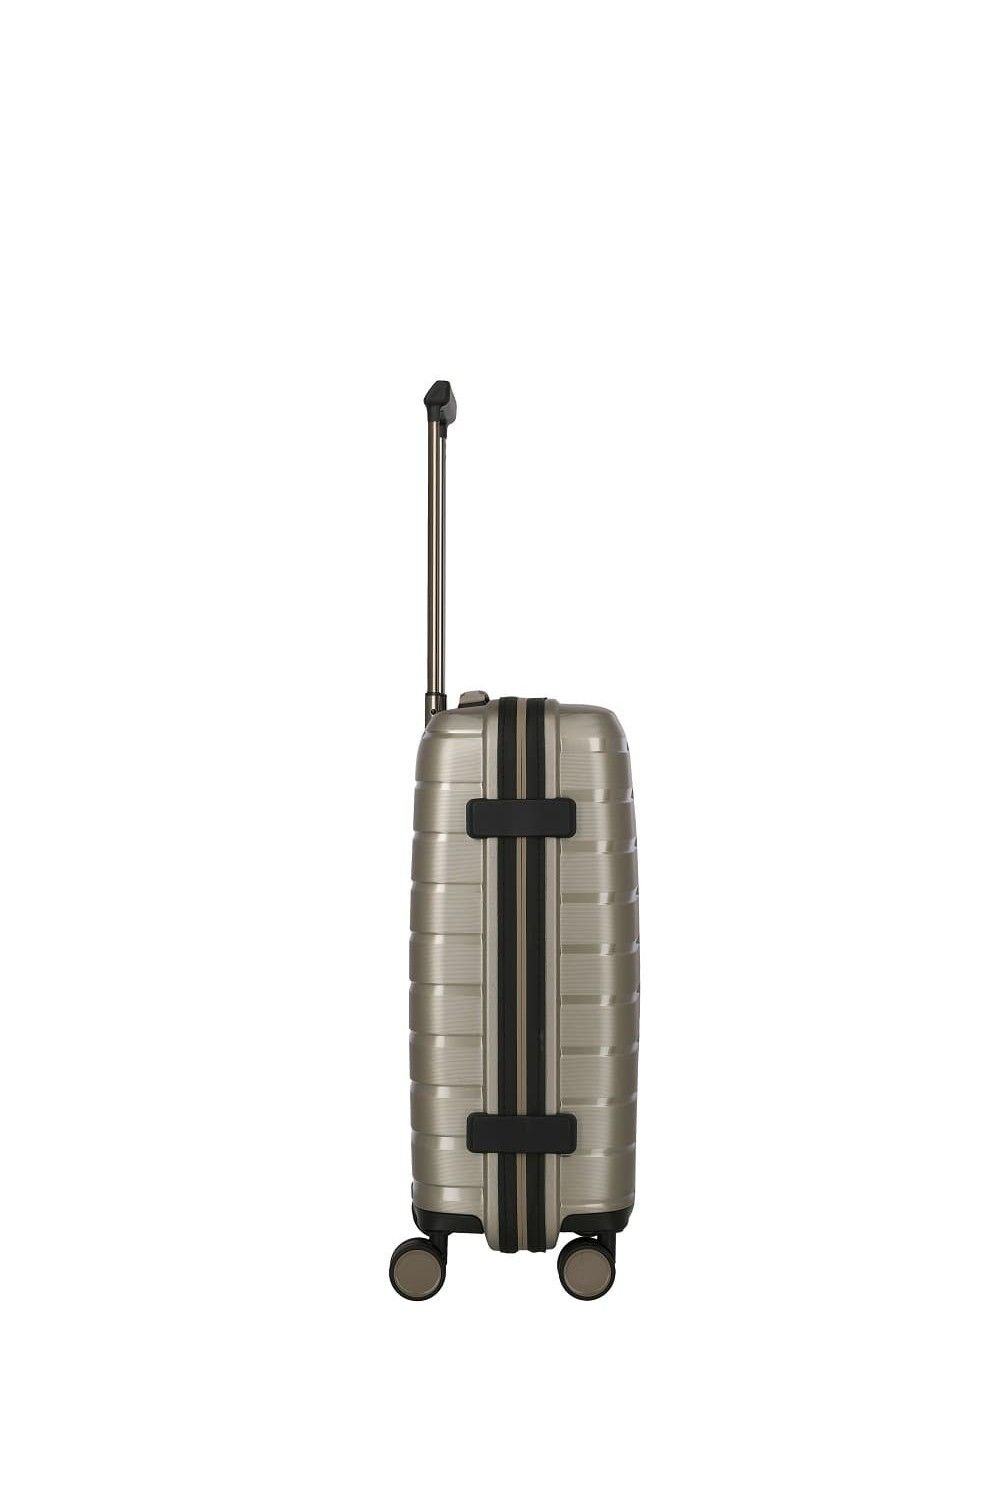 Hand luggage Air Base Travelite 55x40x20 cm 4 wheel